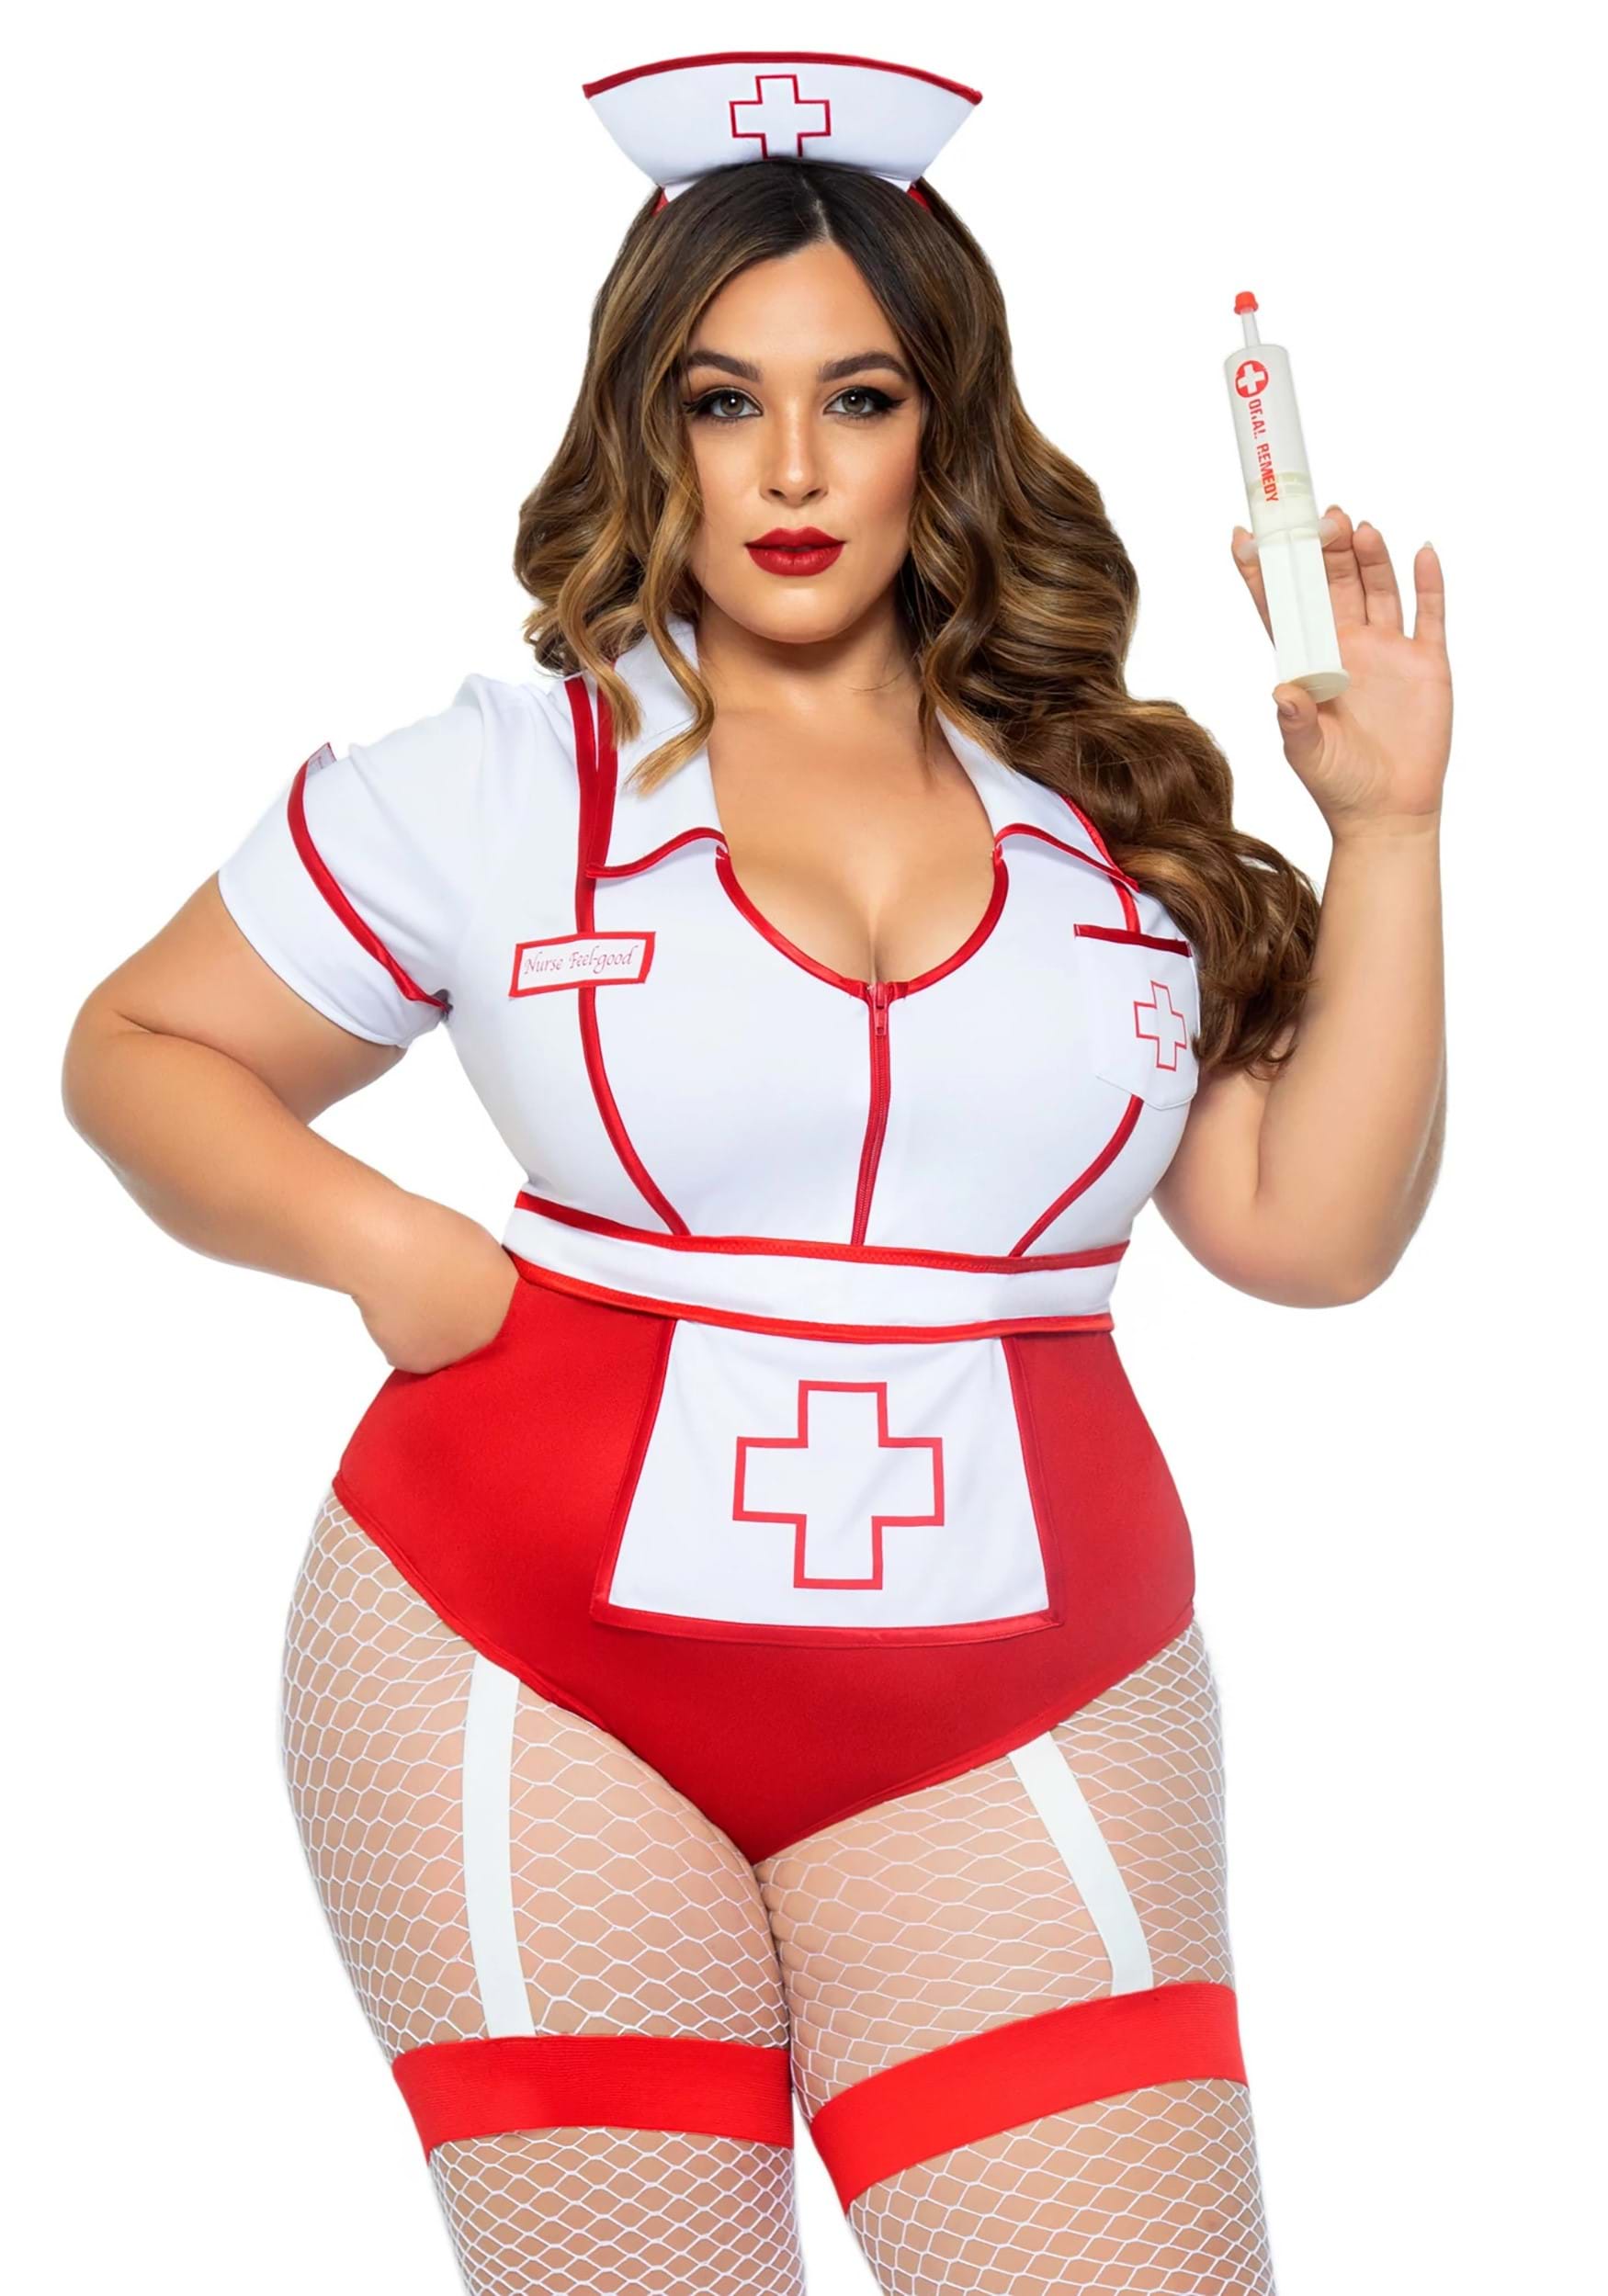 Plus Size Feelgood Women S Nurse Costume